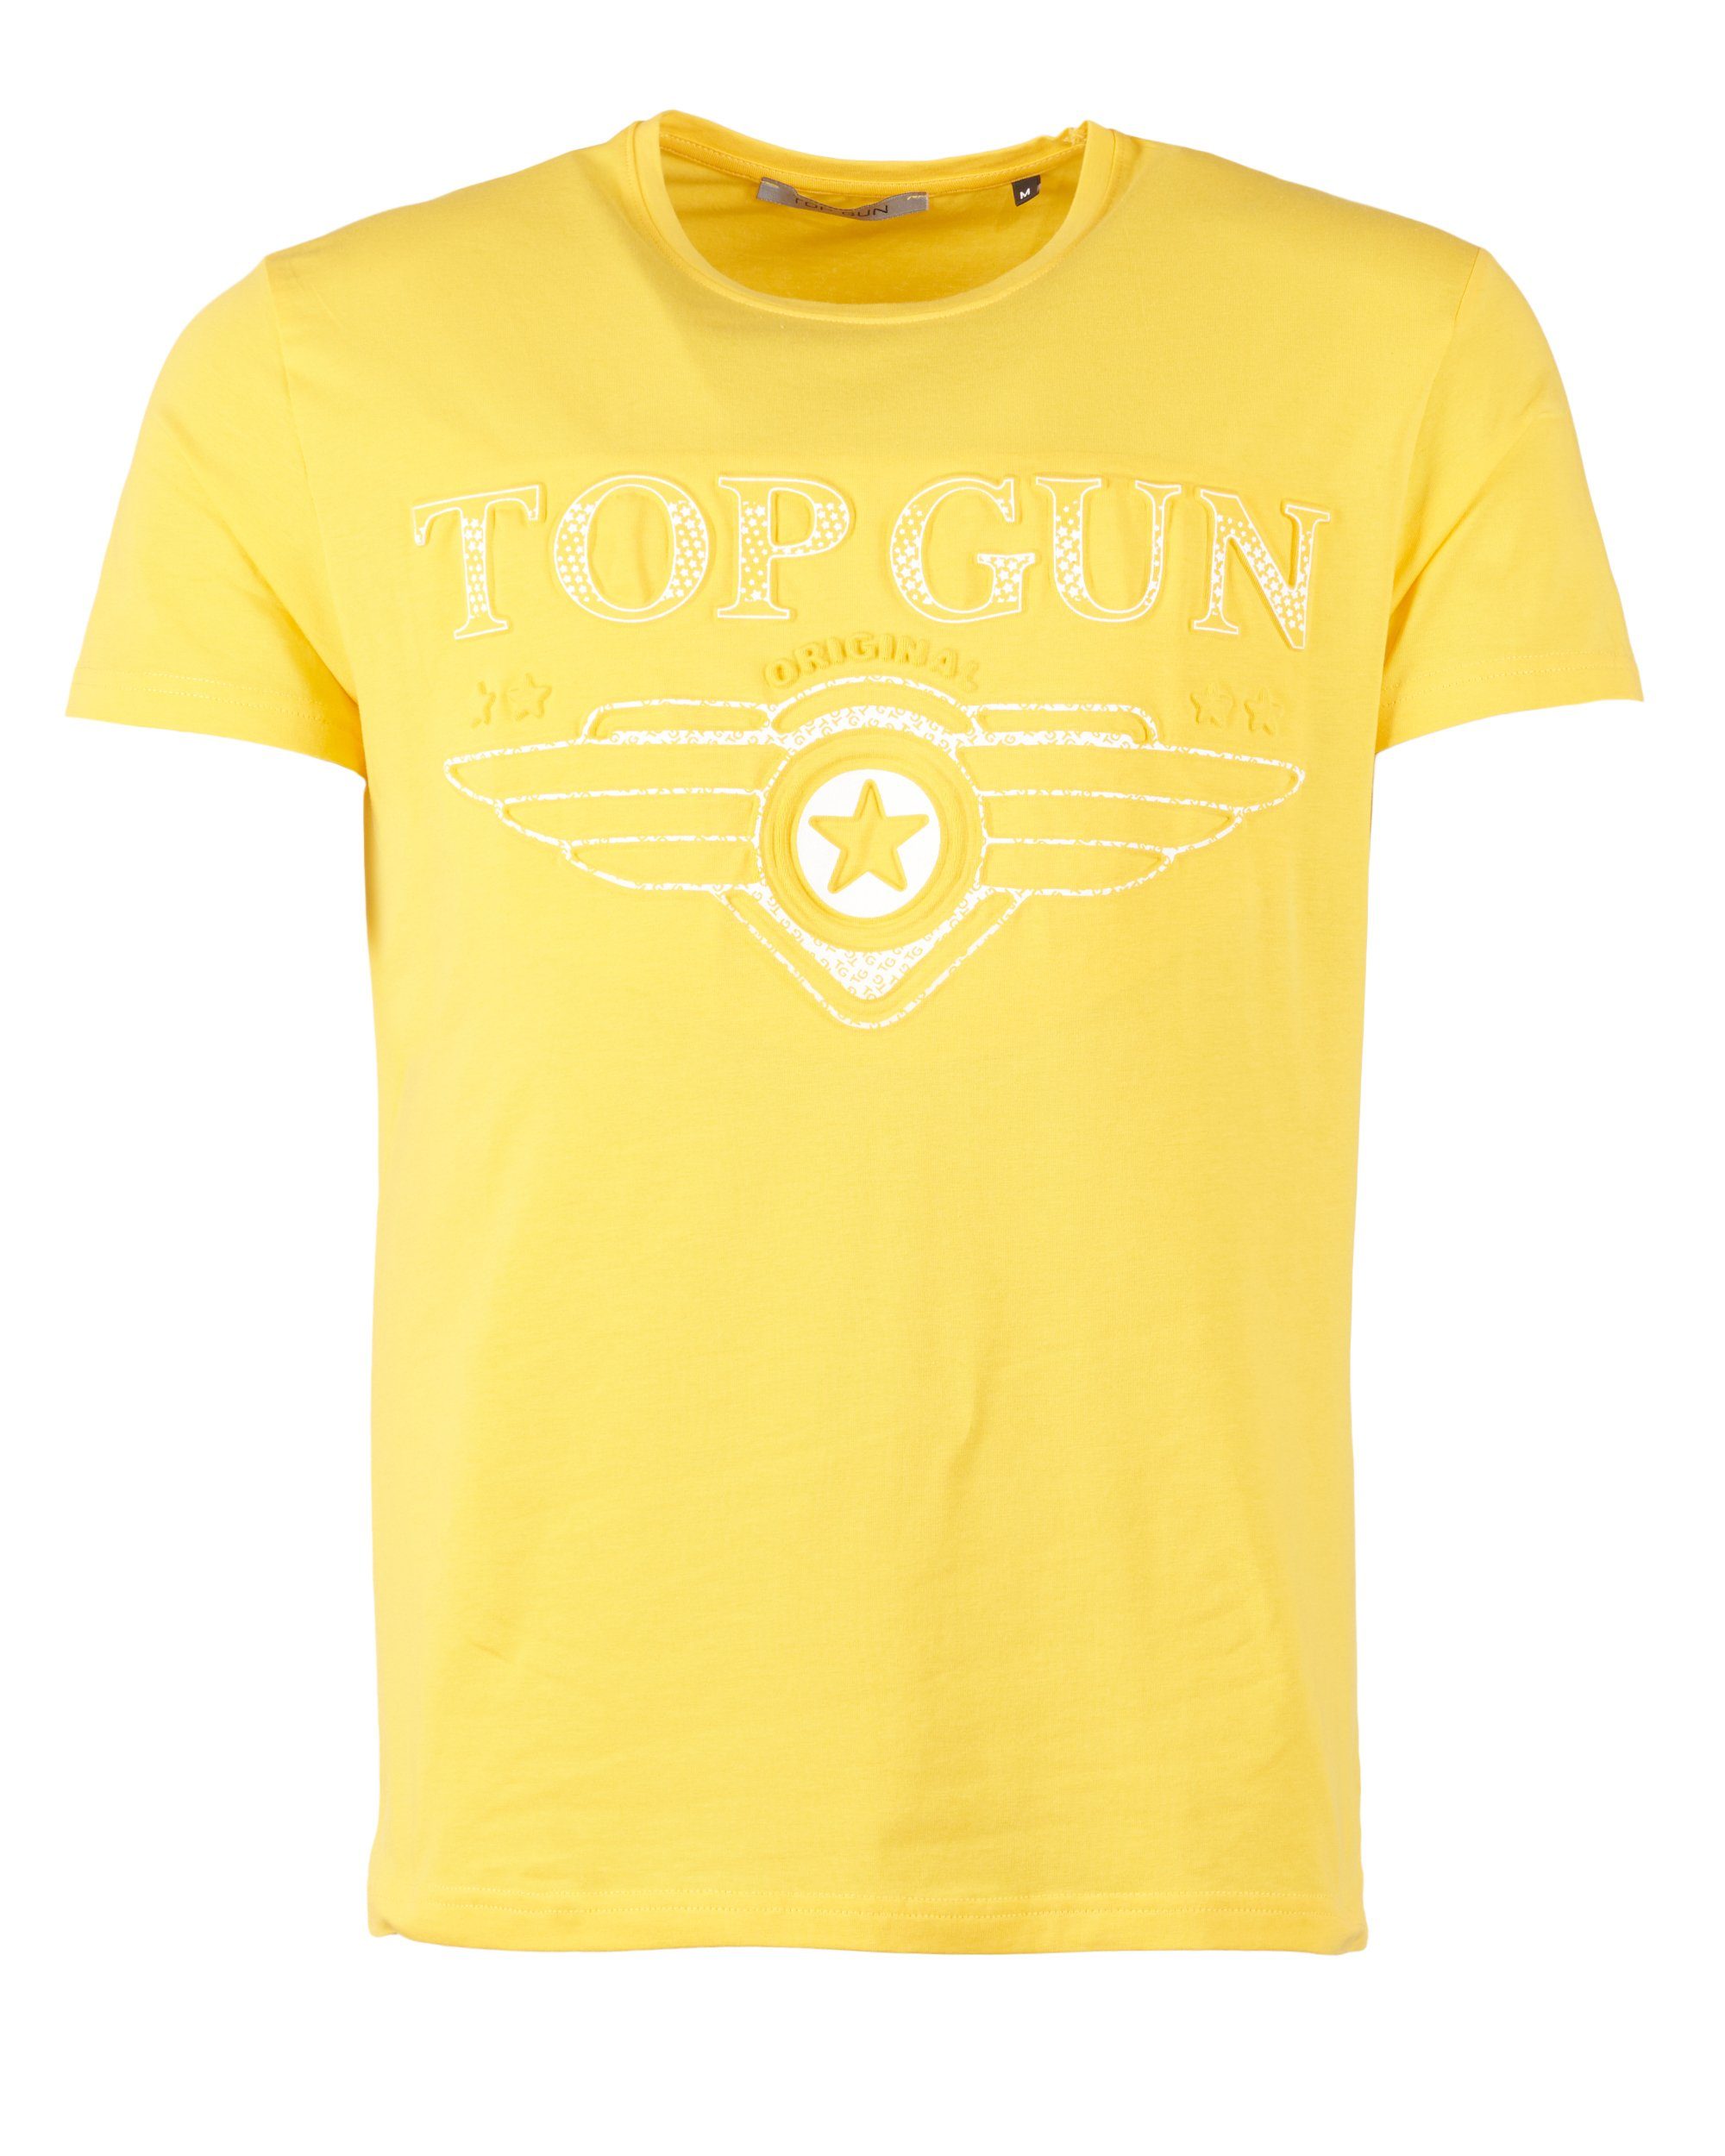 TG20193018 TOP T-Shirt GUN Bling